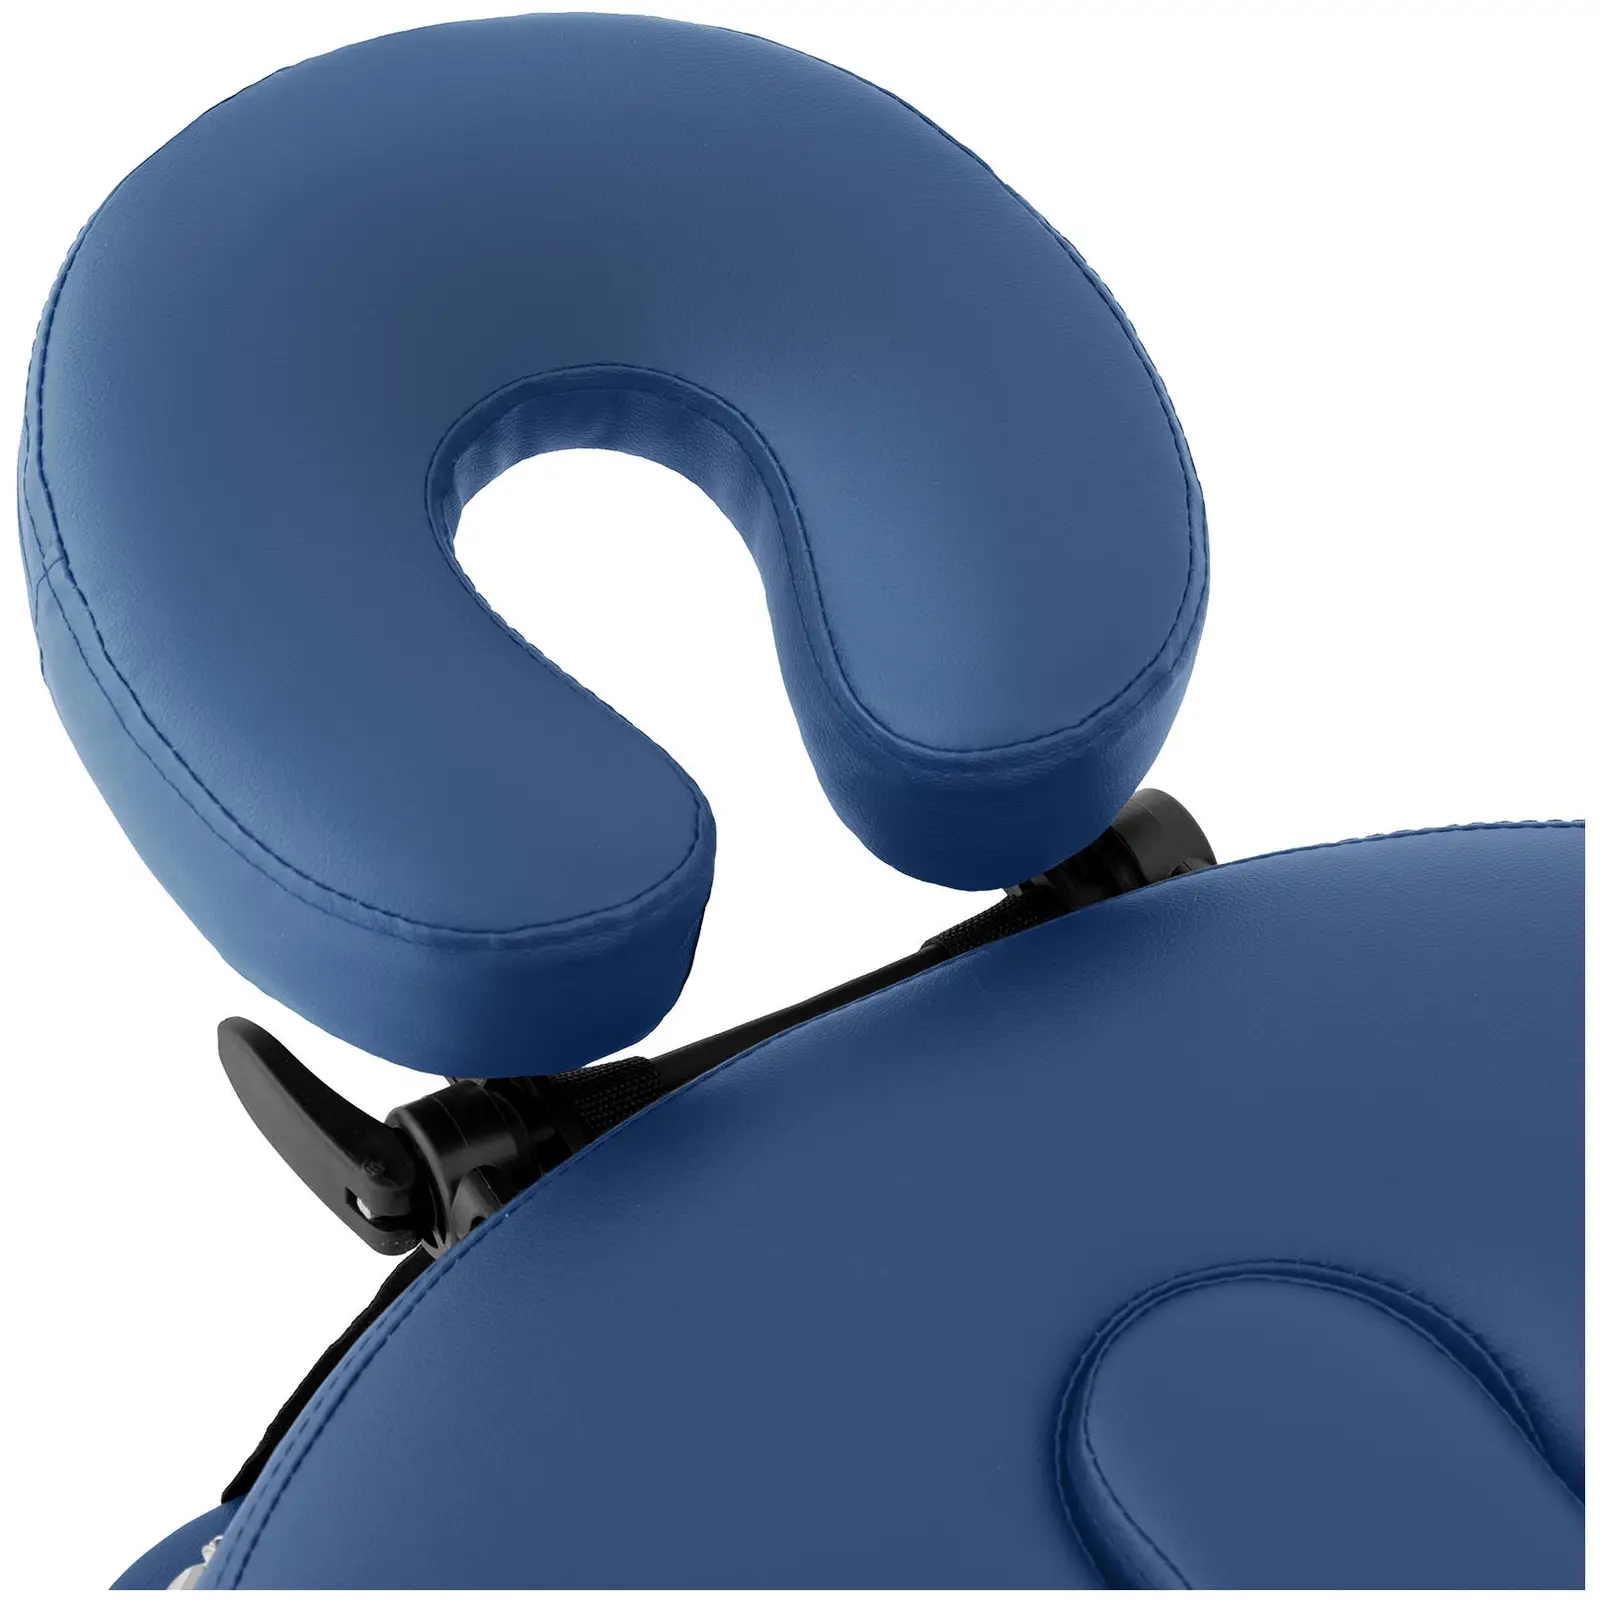 Camilla de masaje plegable - 185-211 x 70-88 x 63-85 cm - 227 kg - Azul